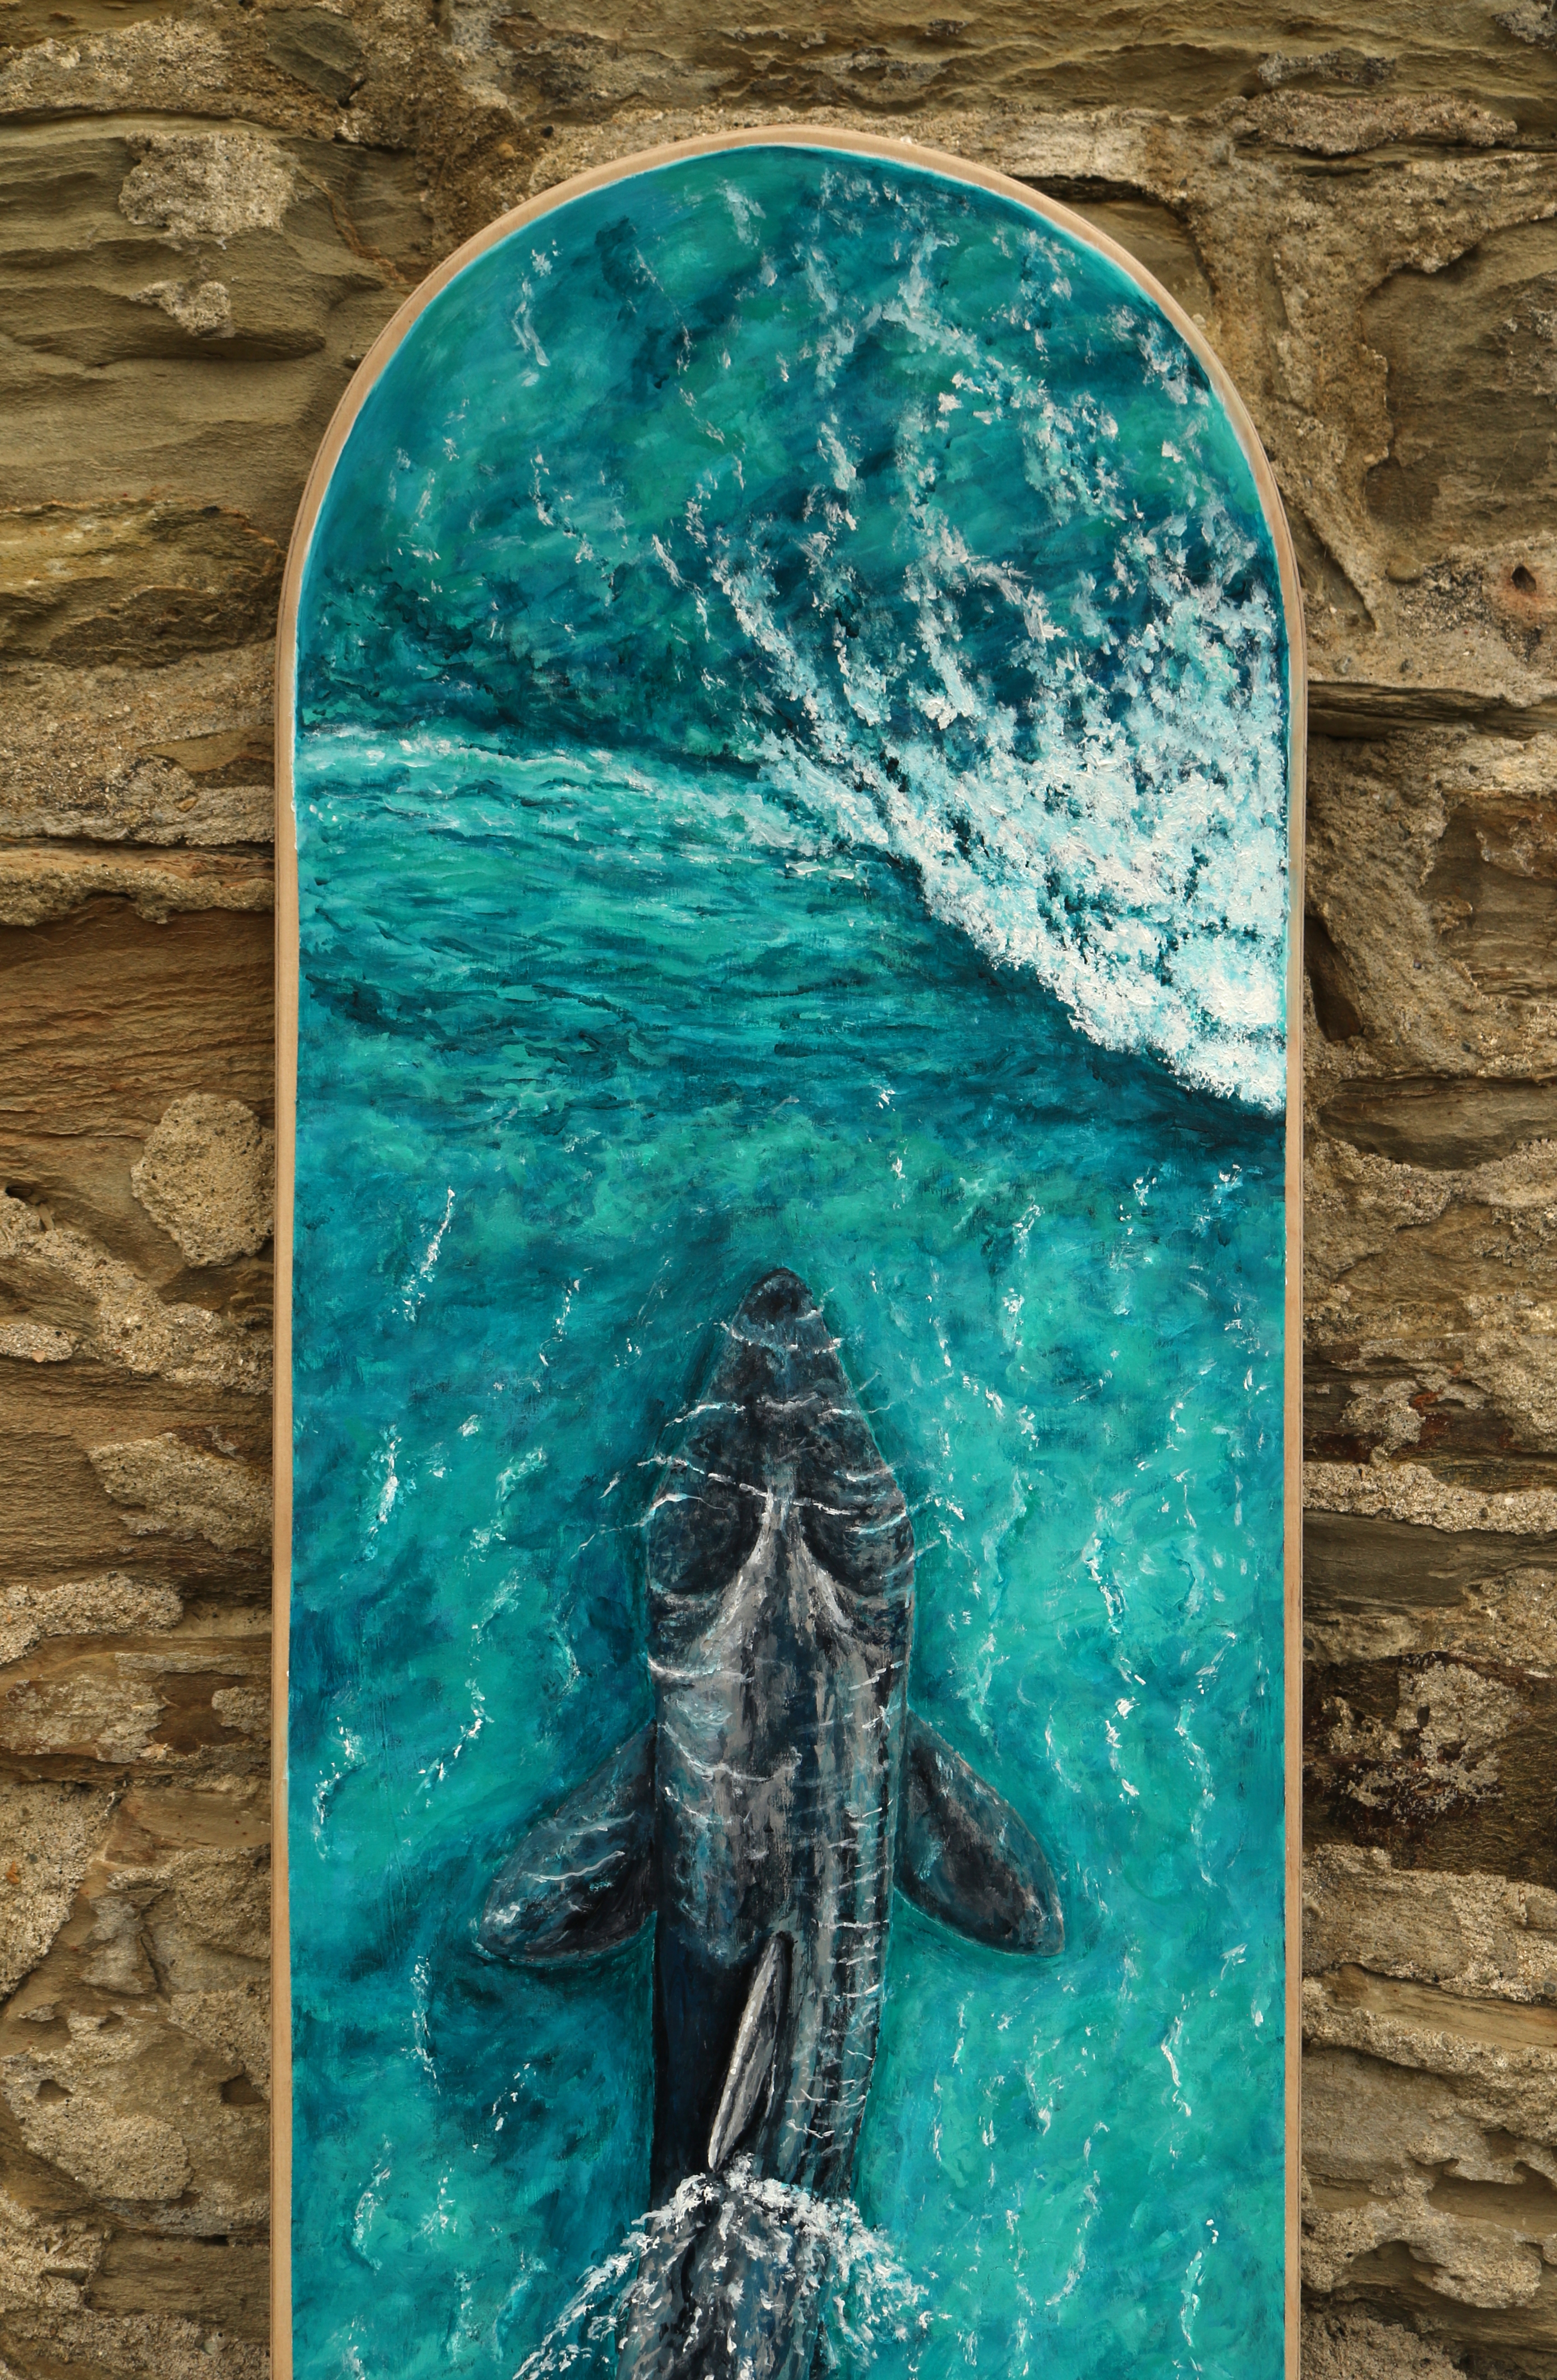 Sharing the Surf, Basking Sharks detail